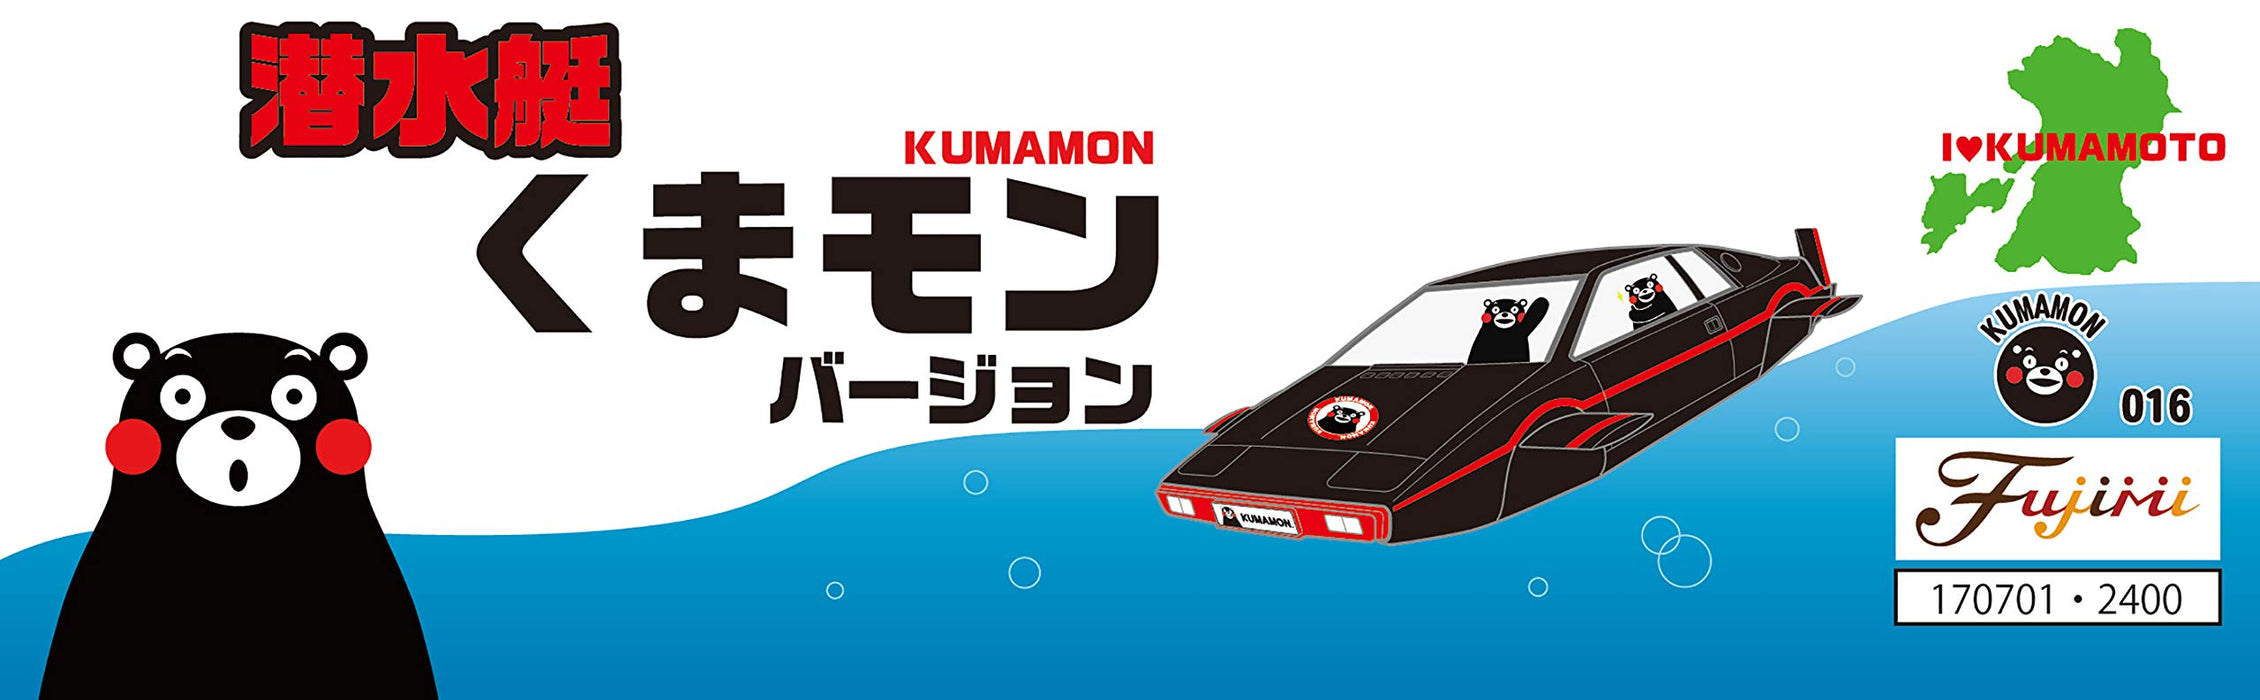 Fujimi Modèle Kumamon Série No.16 Submersible Kumamon Version Code Couleur Plastique Modèle Kumamon 16